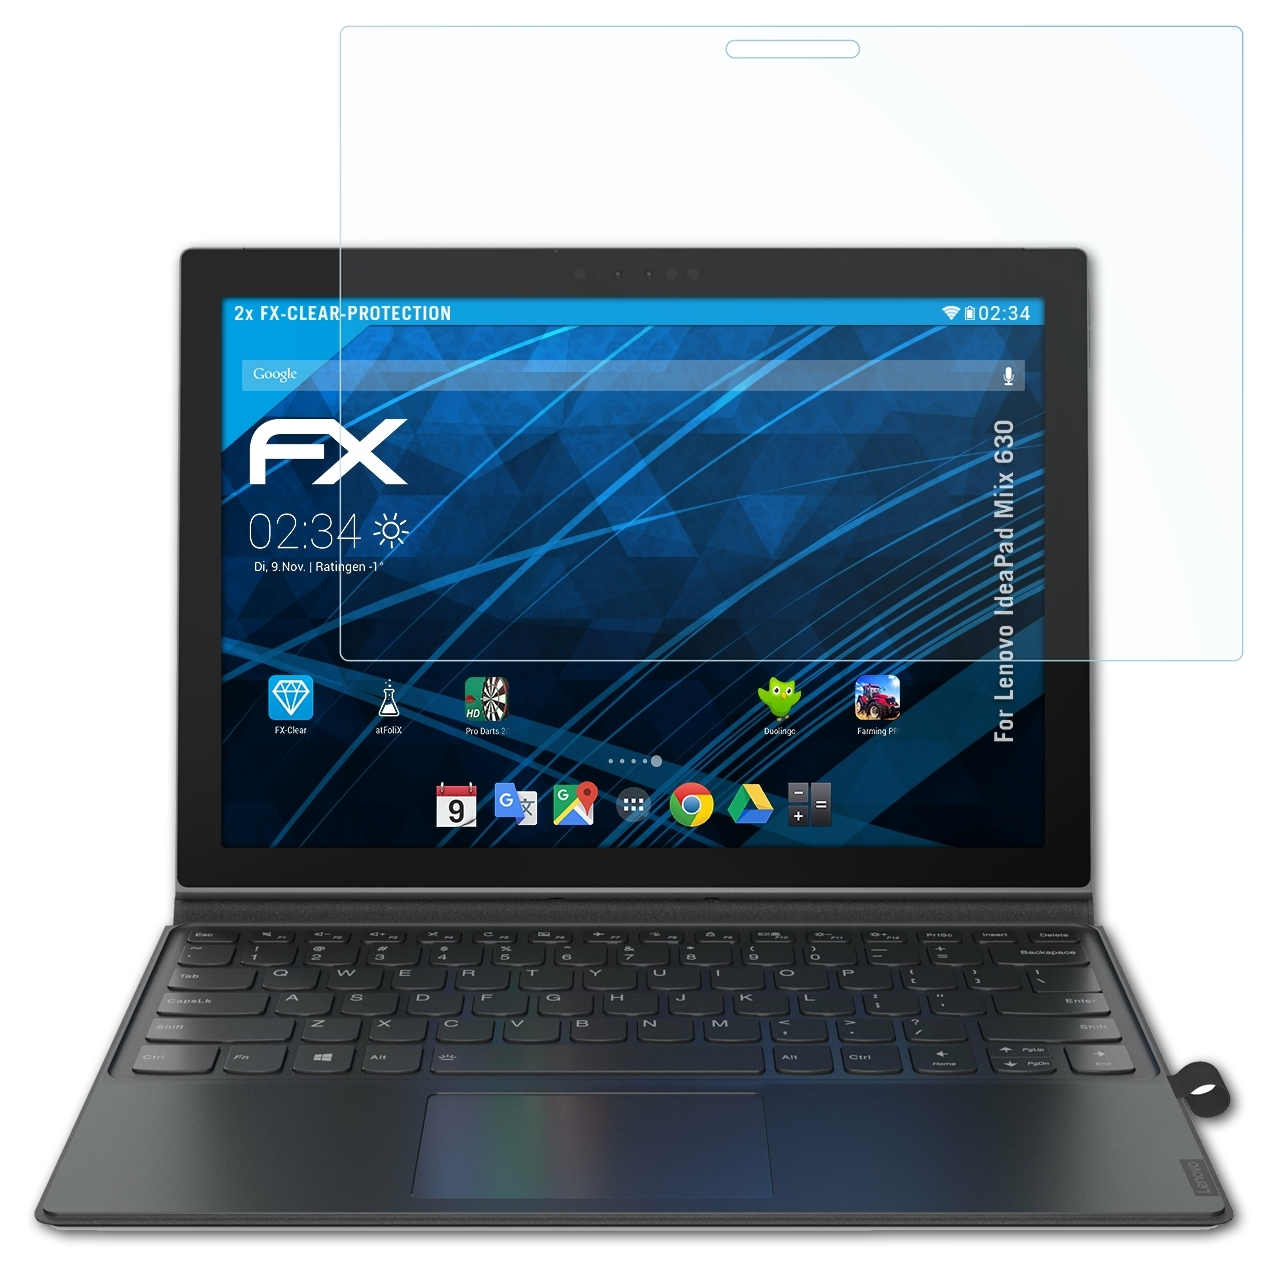 FX-Clear ATFOLIX Miix Lenovo 630) IdeaPad Displayschutz(für 2x